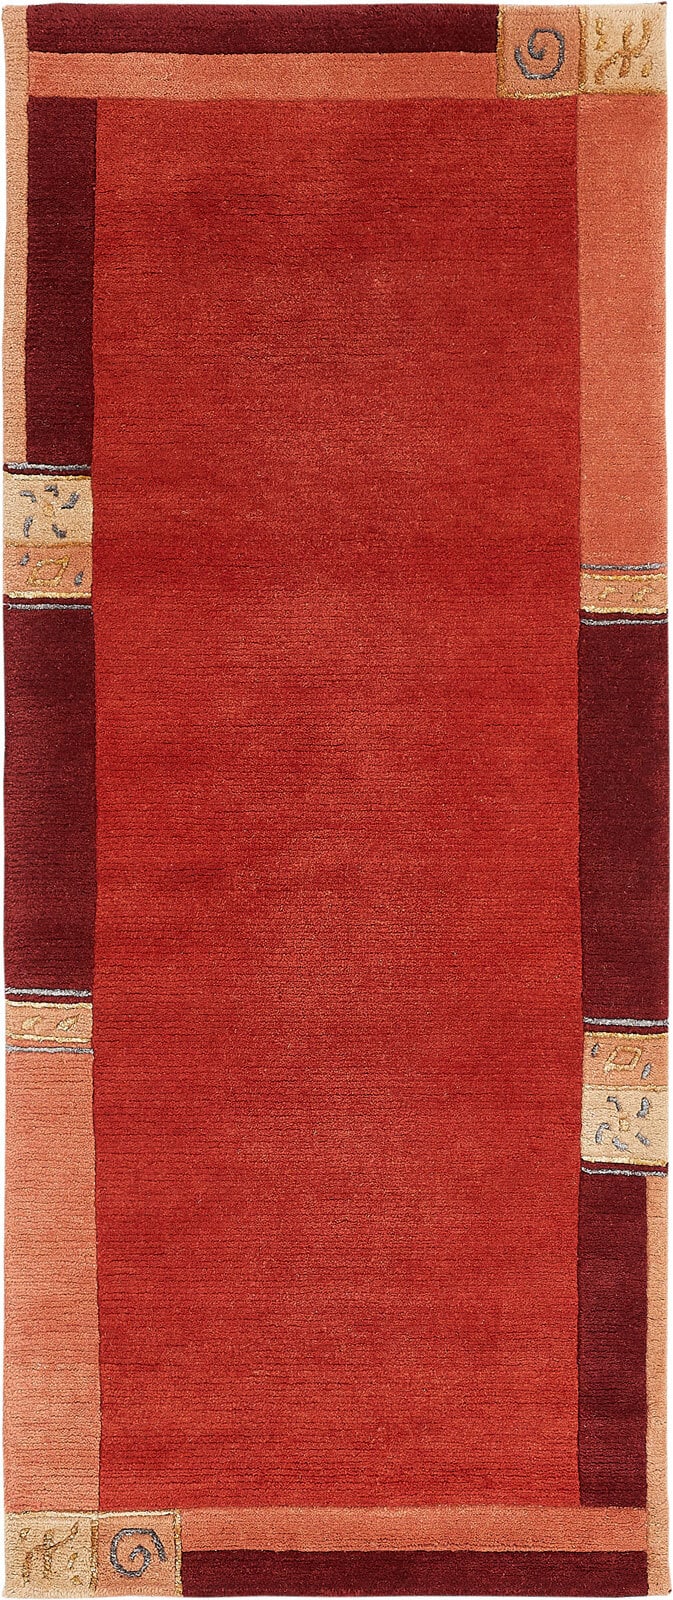 Teppich MANALI 80 x 200 cm rot